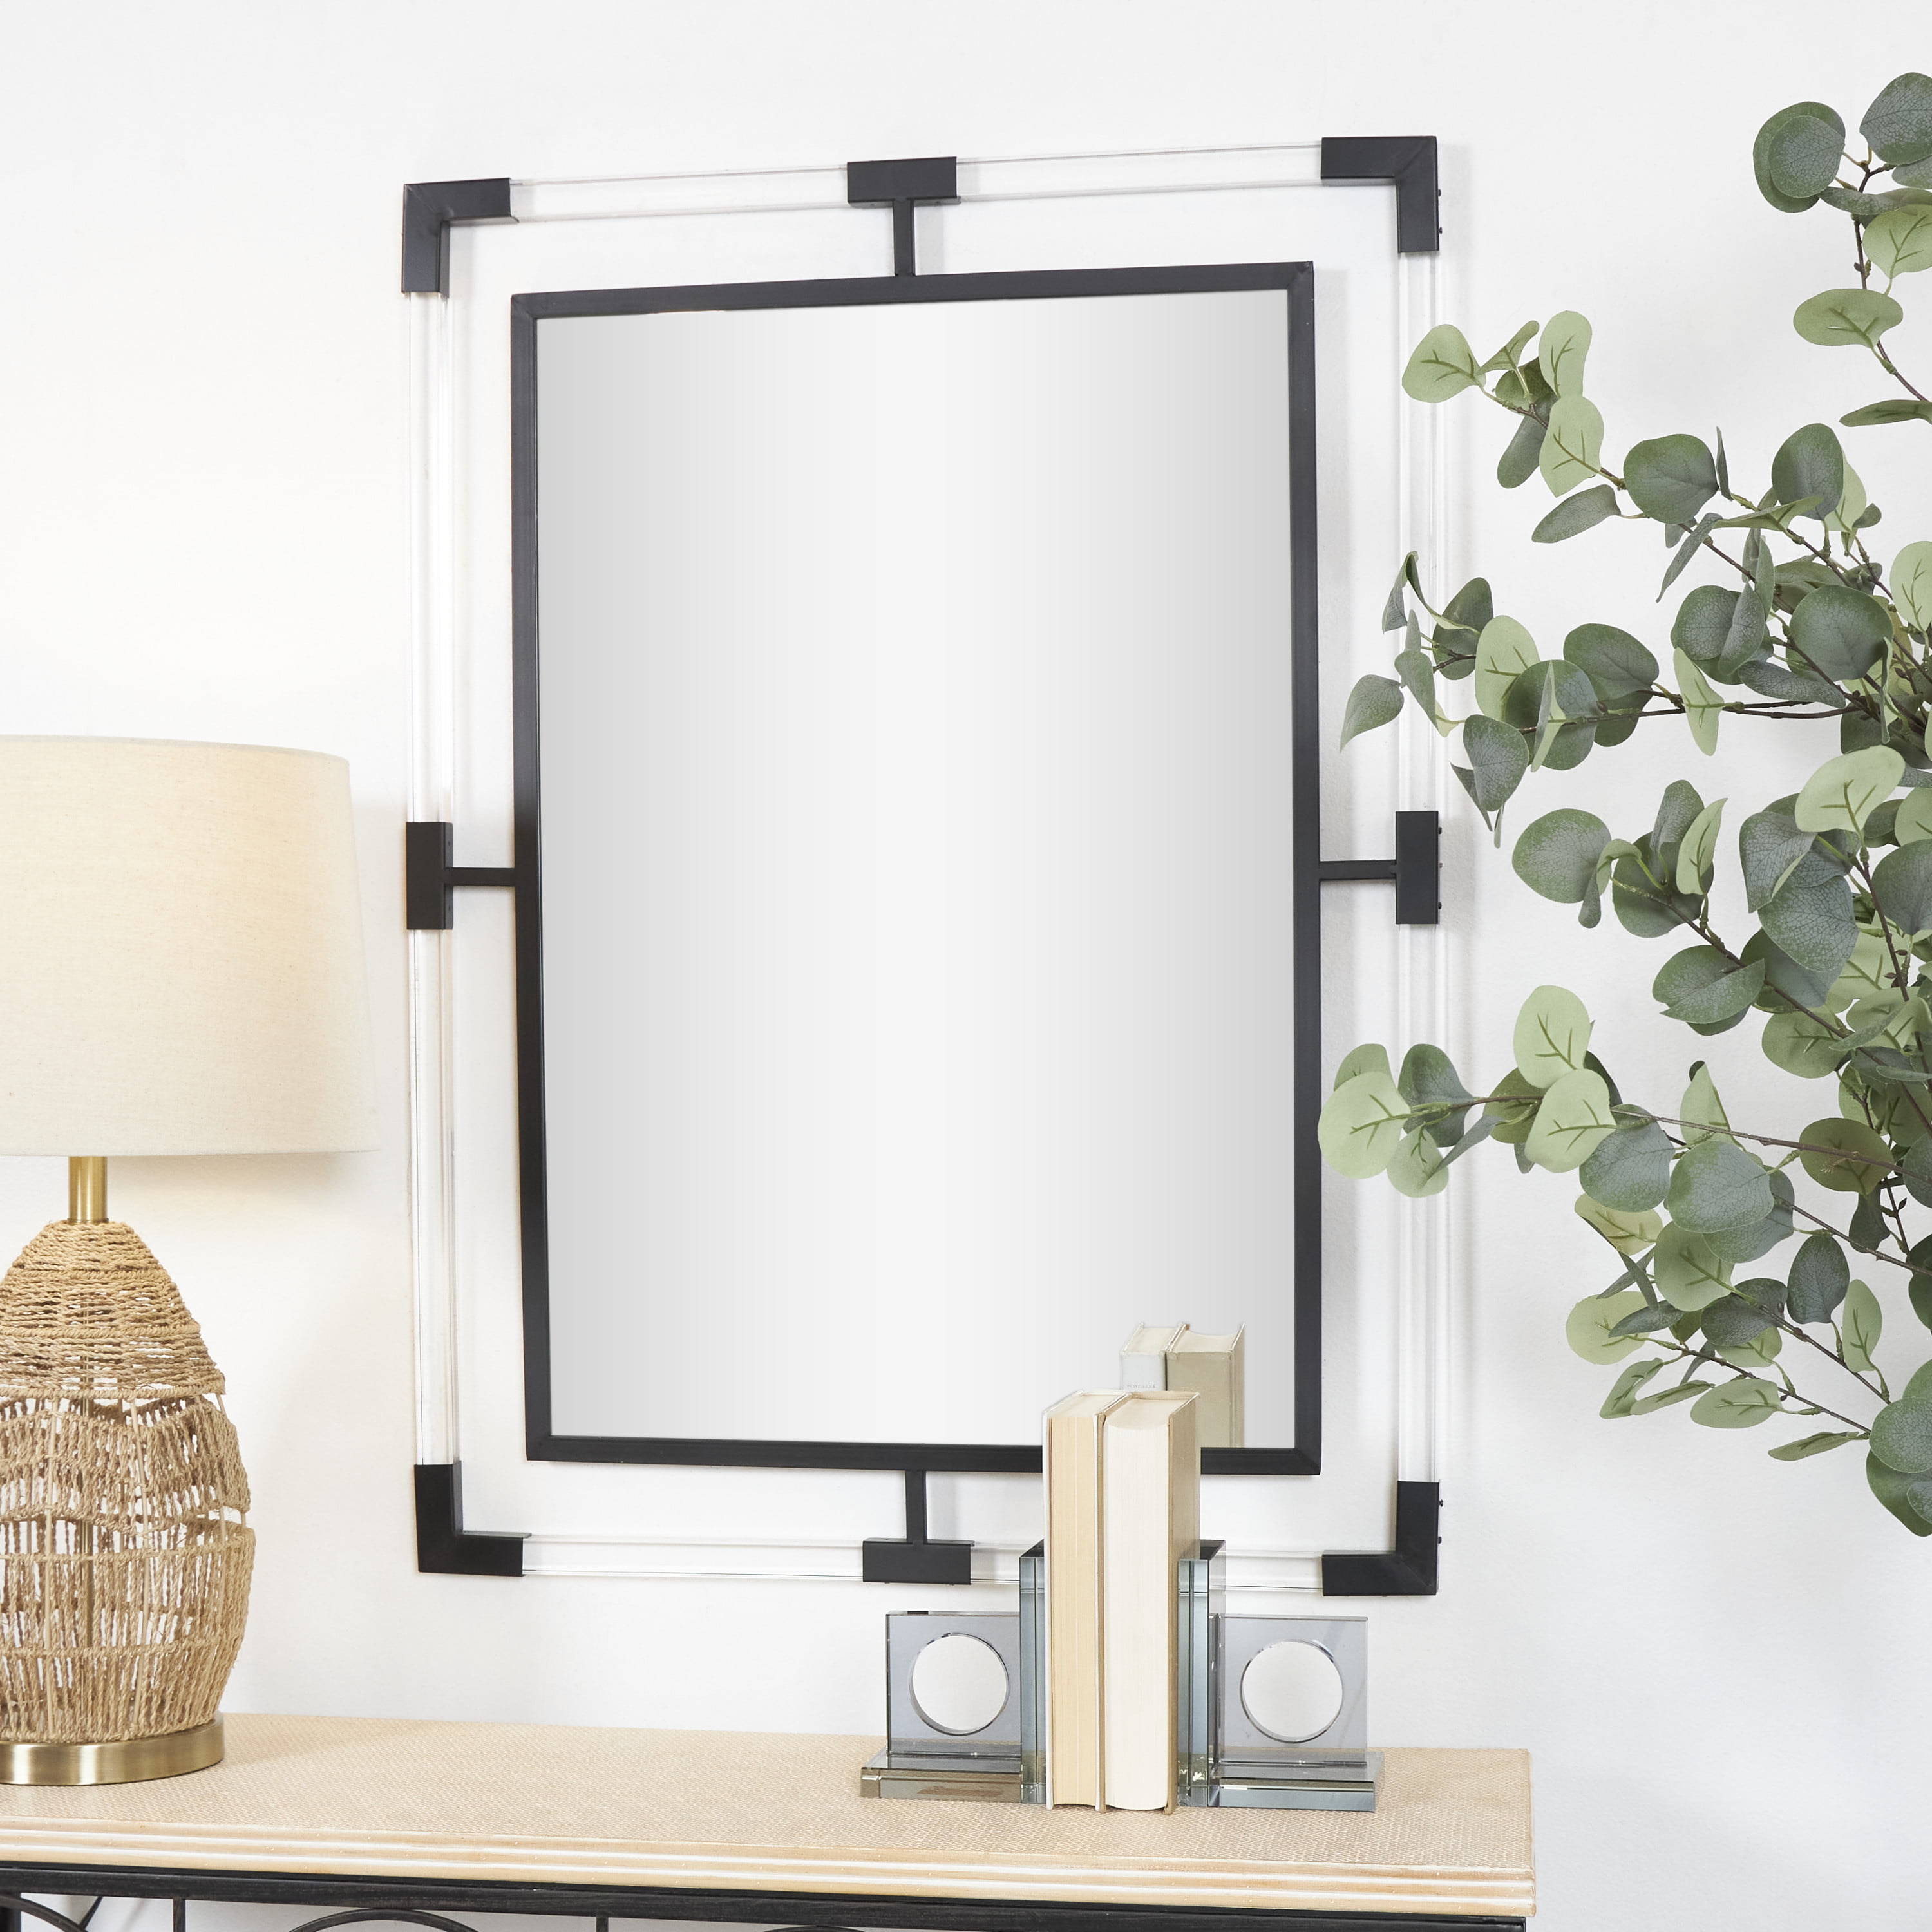  Frame My Mirror Add A Frame - Black 36 x 36 Mirror Frame Kit-  Ideal for Bathroom, Wall Decor, Bedroom and Livingroom - Moisture Resistant  - Dawson Design - Mirror NOT